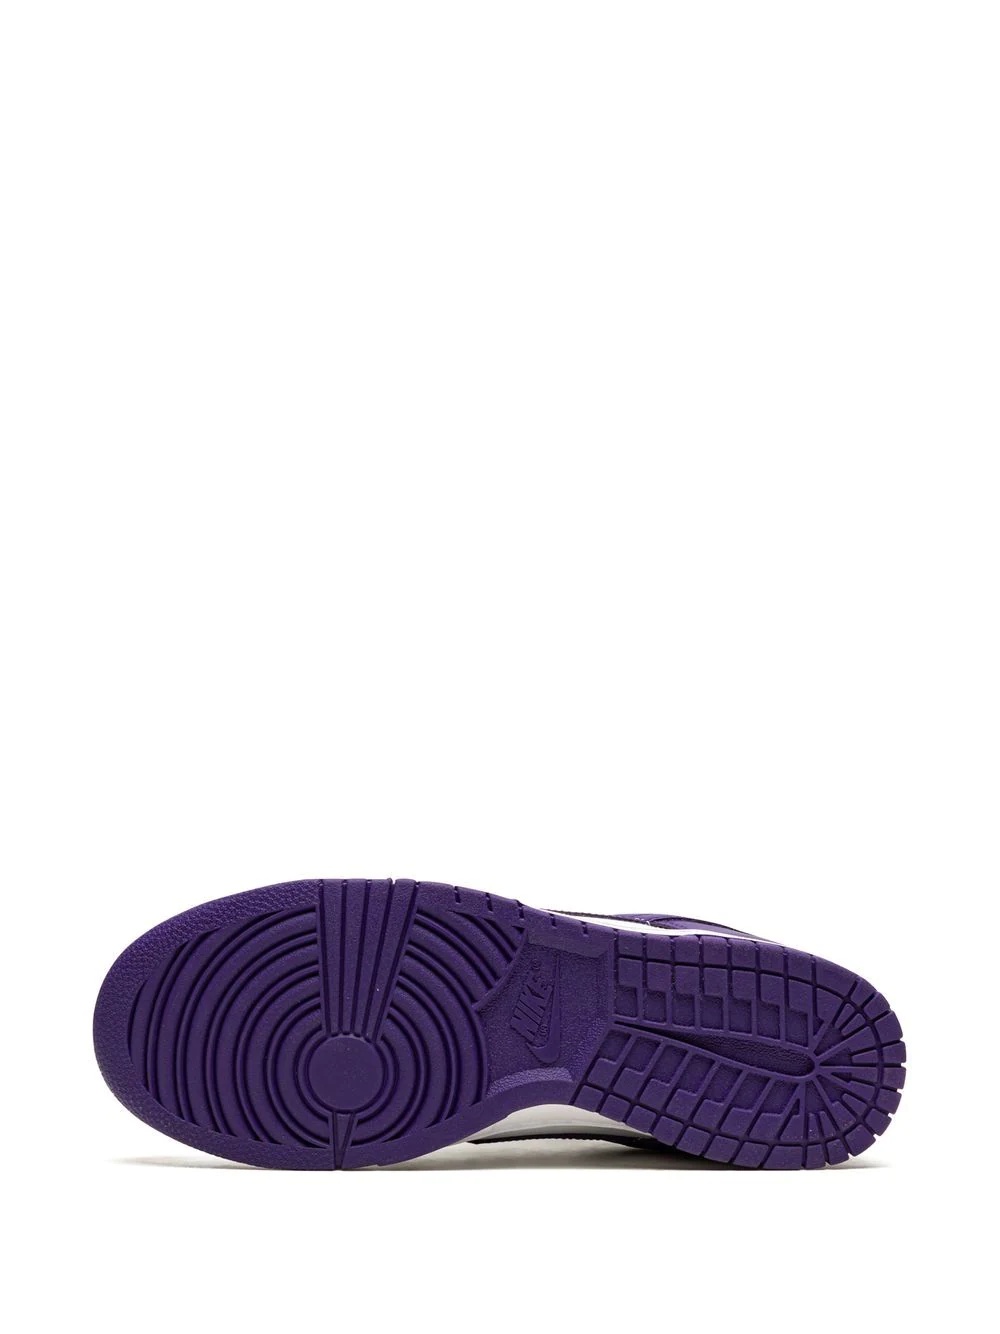 Dunk Low "Court Purple" sneakers - 4